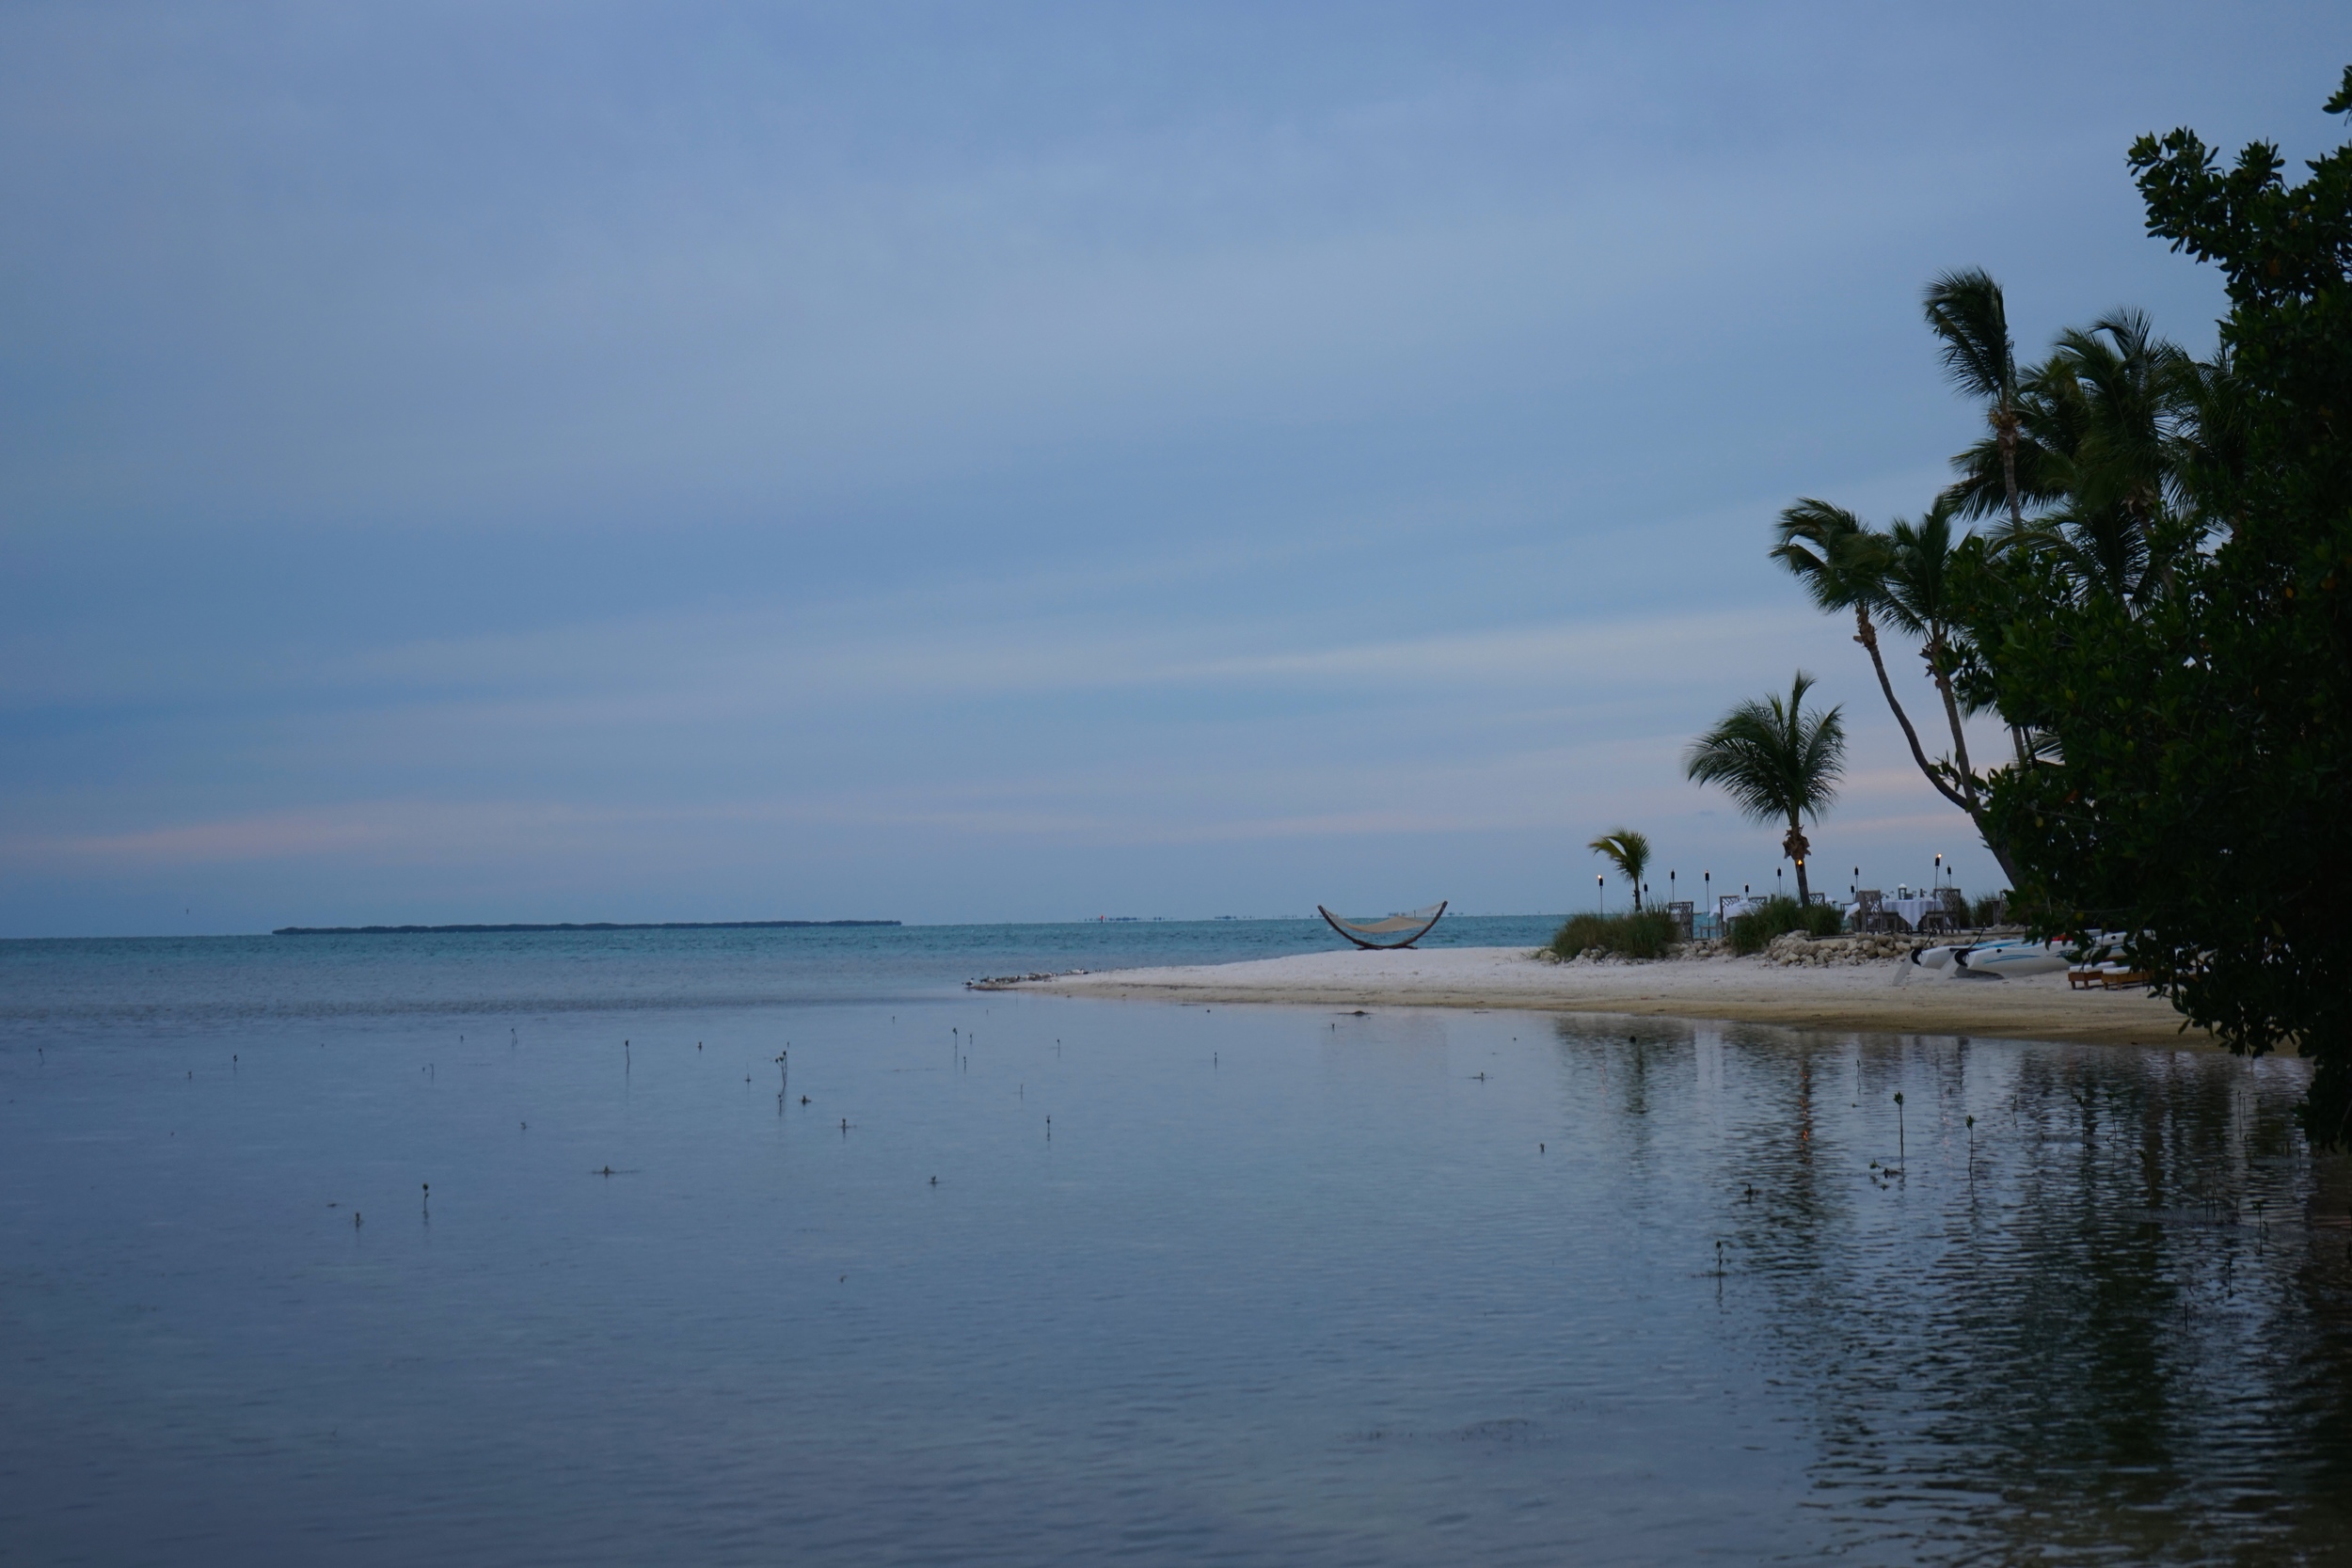  FLORIDA KEYS: LITTLE PALM ISLAND 